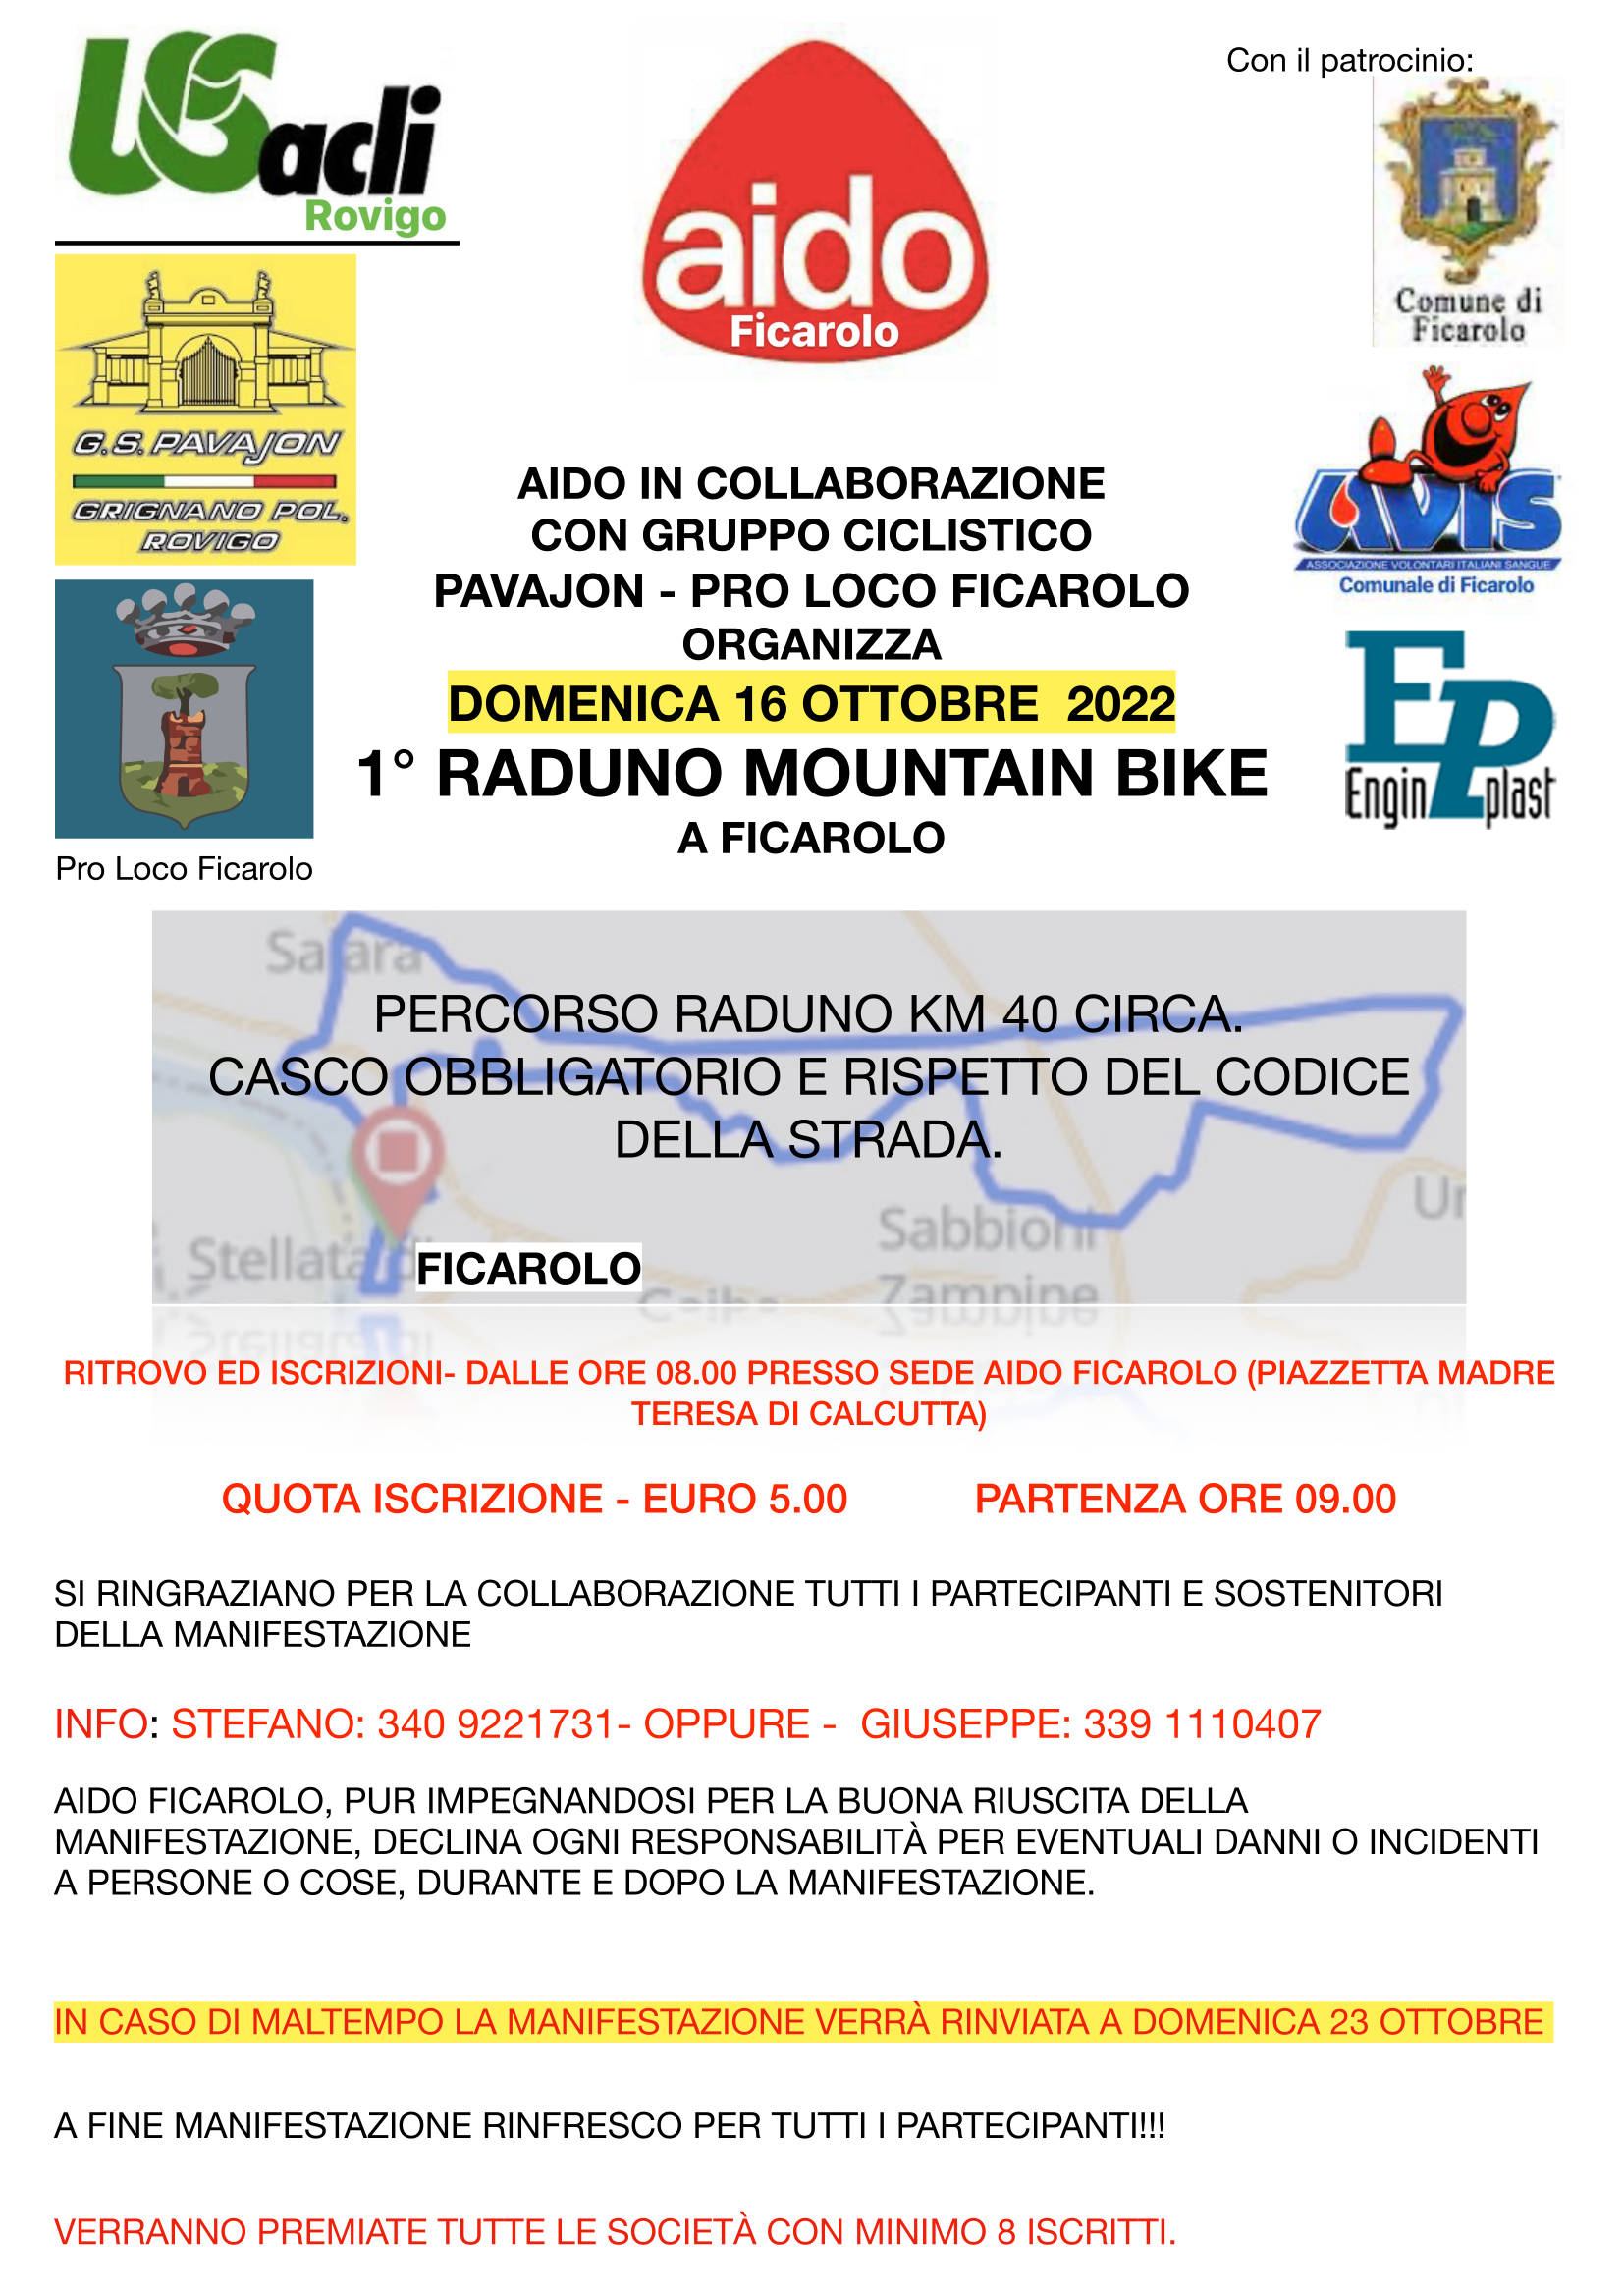 1° Raduno mountain bike a Ficarolo (RO) domenica 16 ottobre 2022